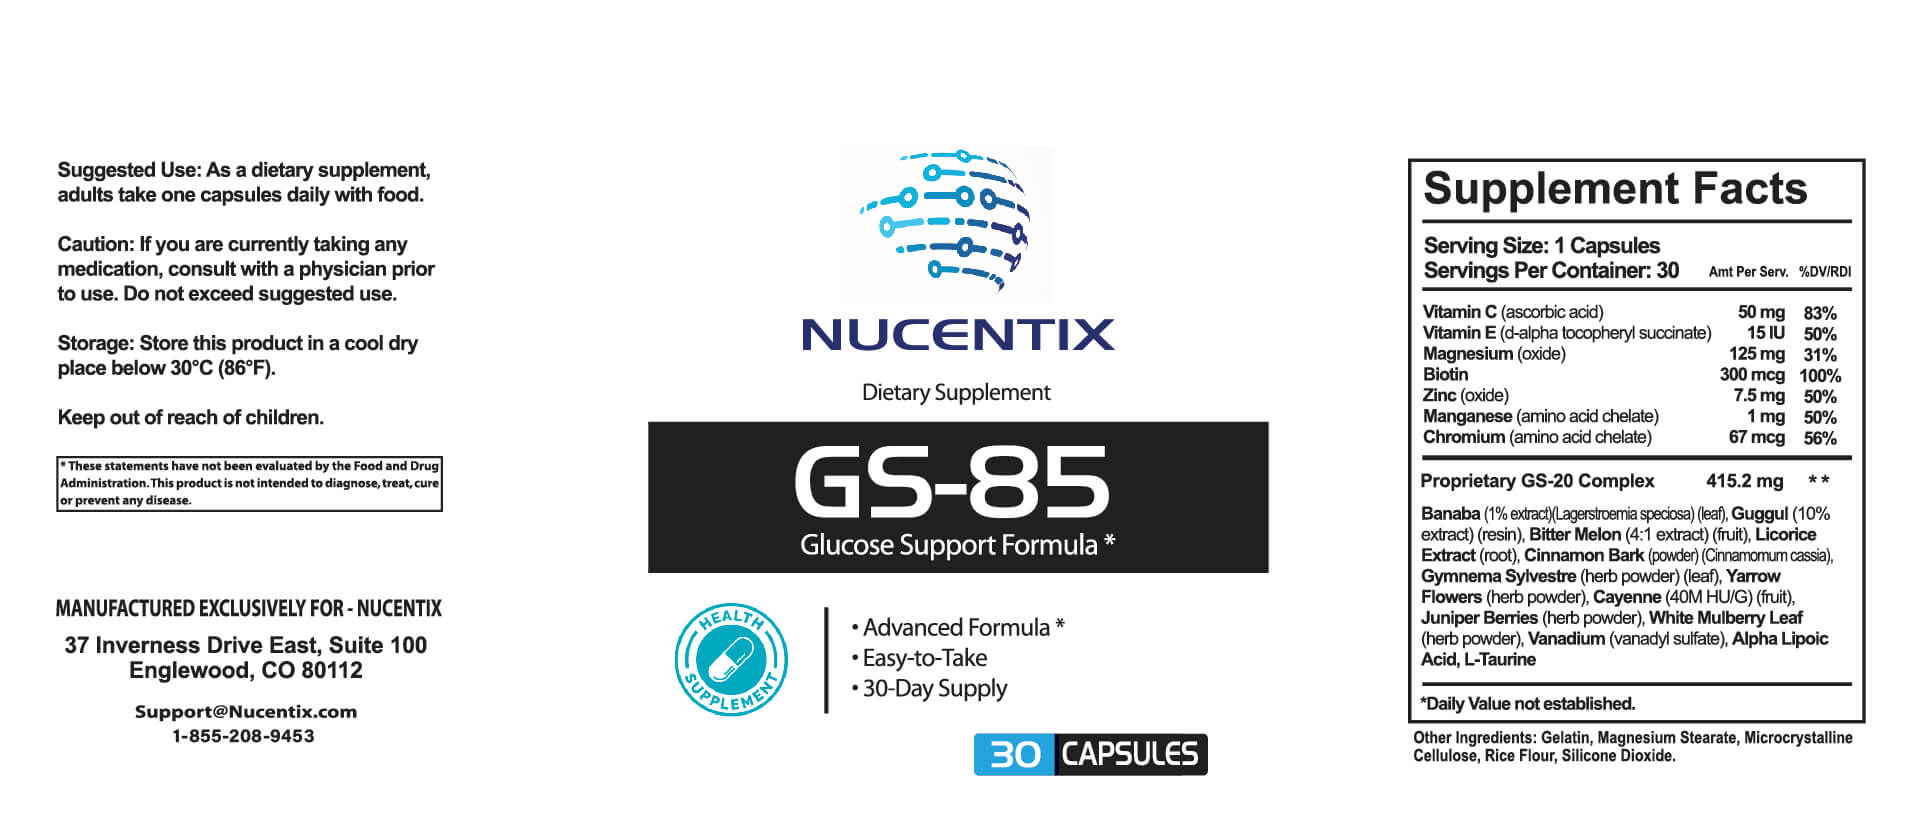 Nucentix GS-85 Ingredients Label